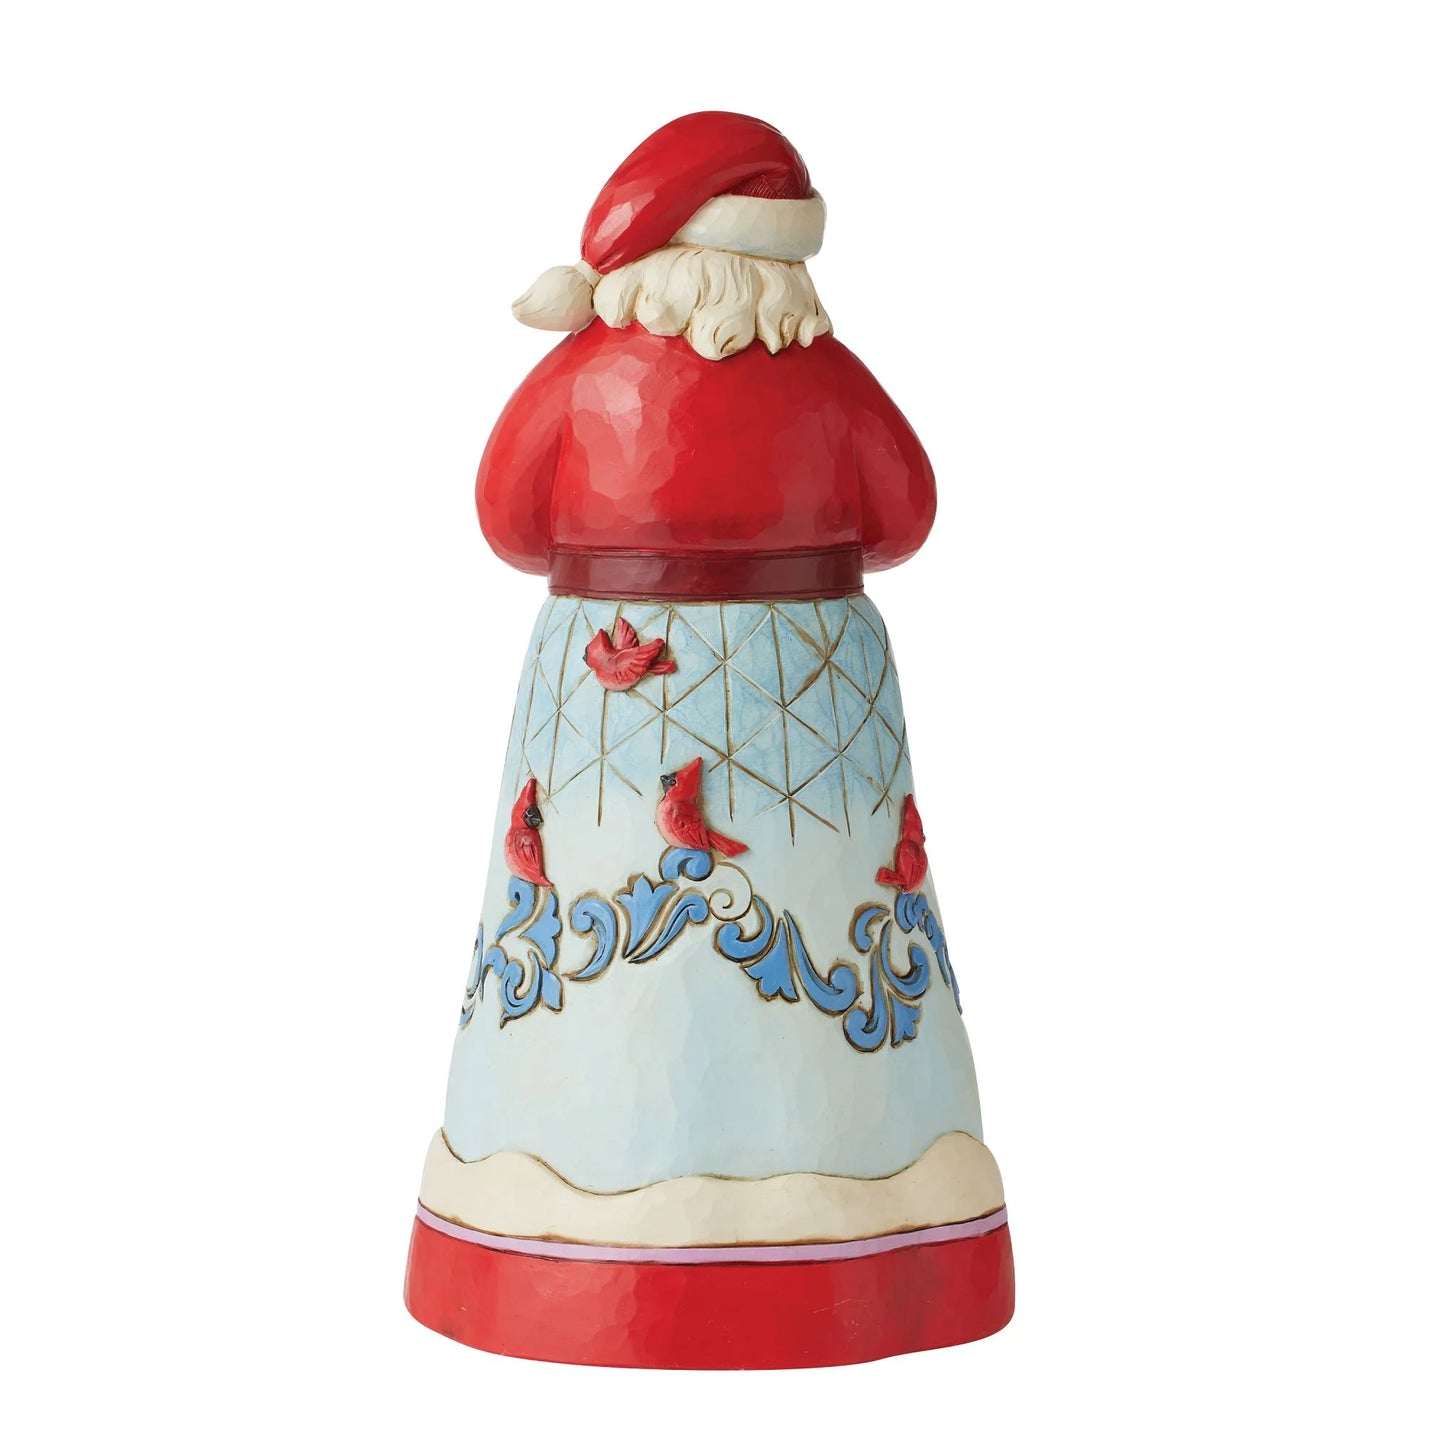 Cardinal Company - Santa with Cardinal Scene Figurine